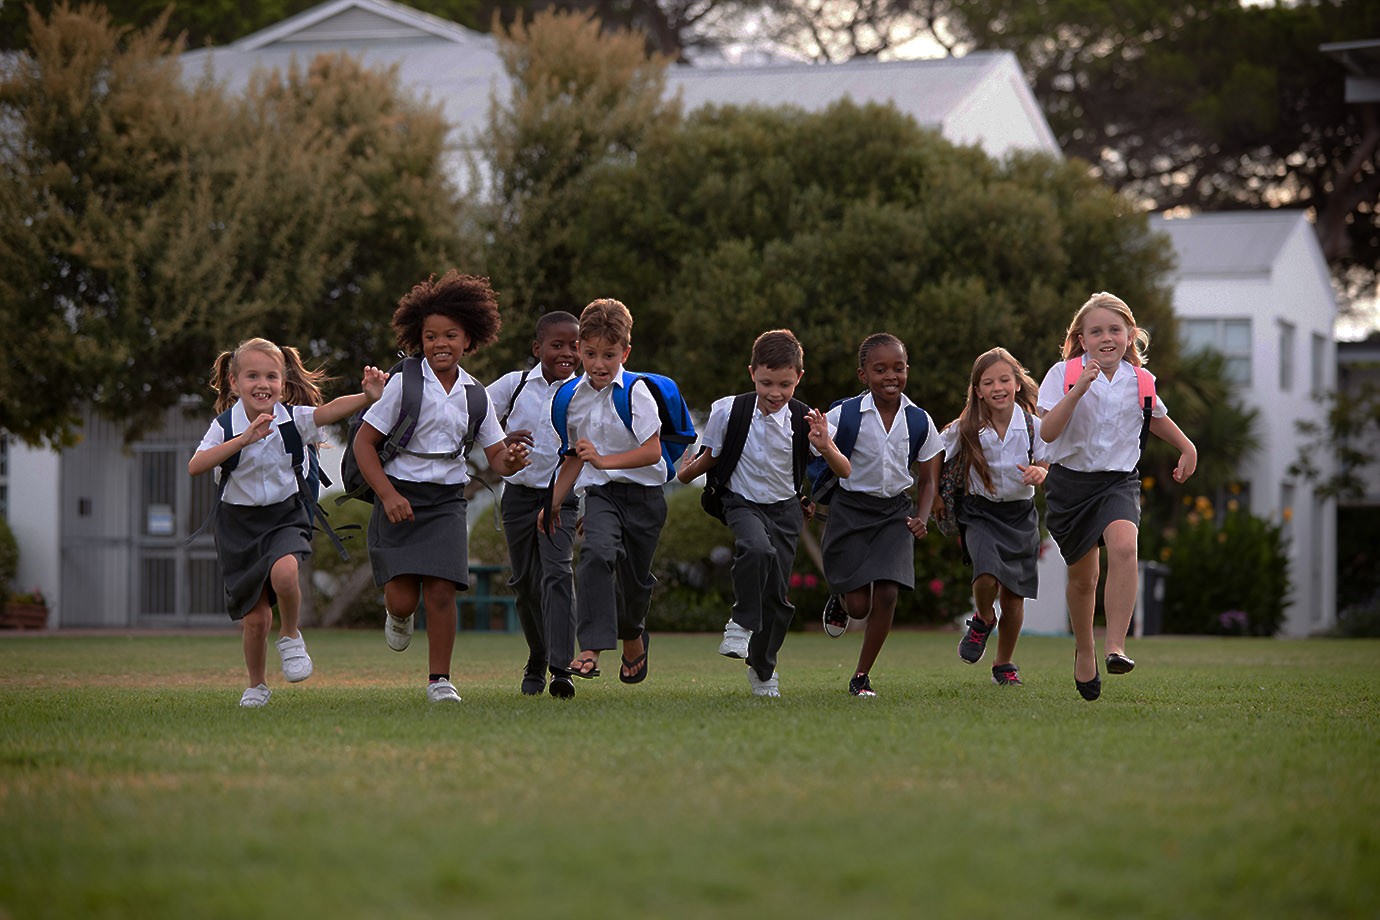 Group of children leaving school